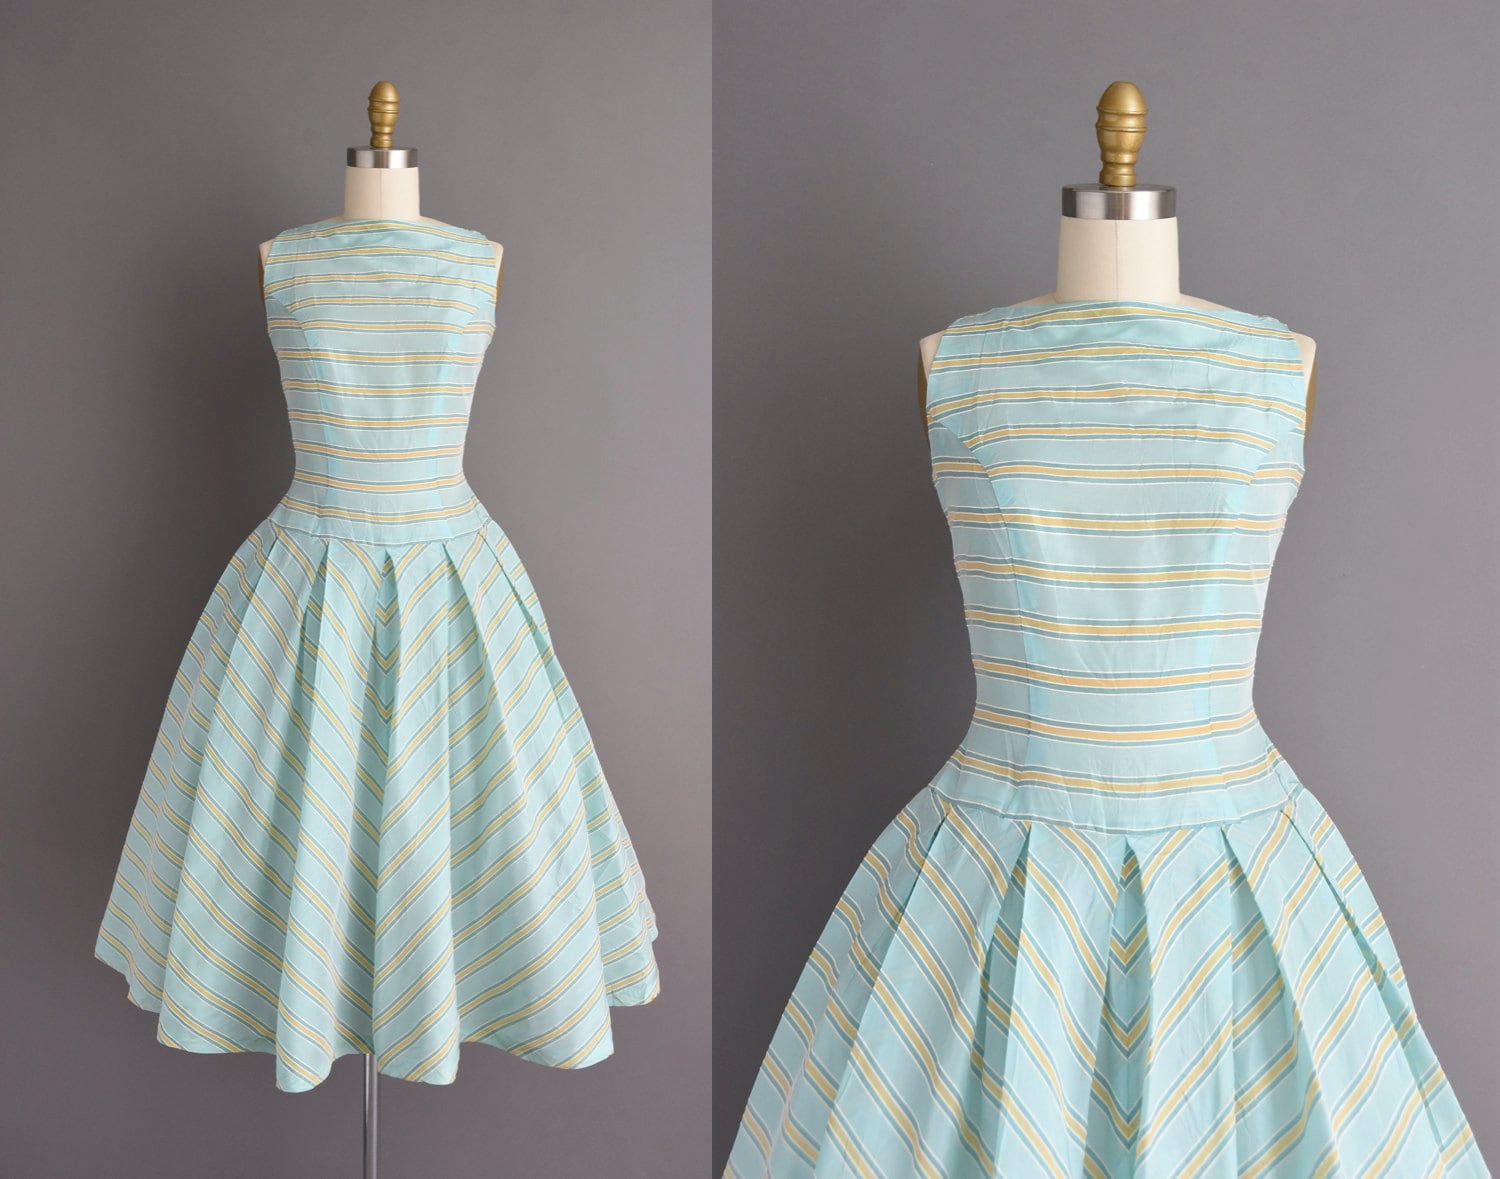 50s Dress Gorgeous Teal Blue & Yellow Striped Full Skirt | Etsy